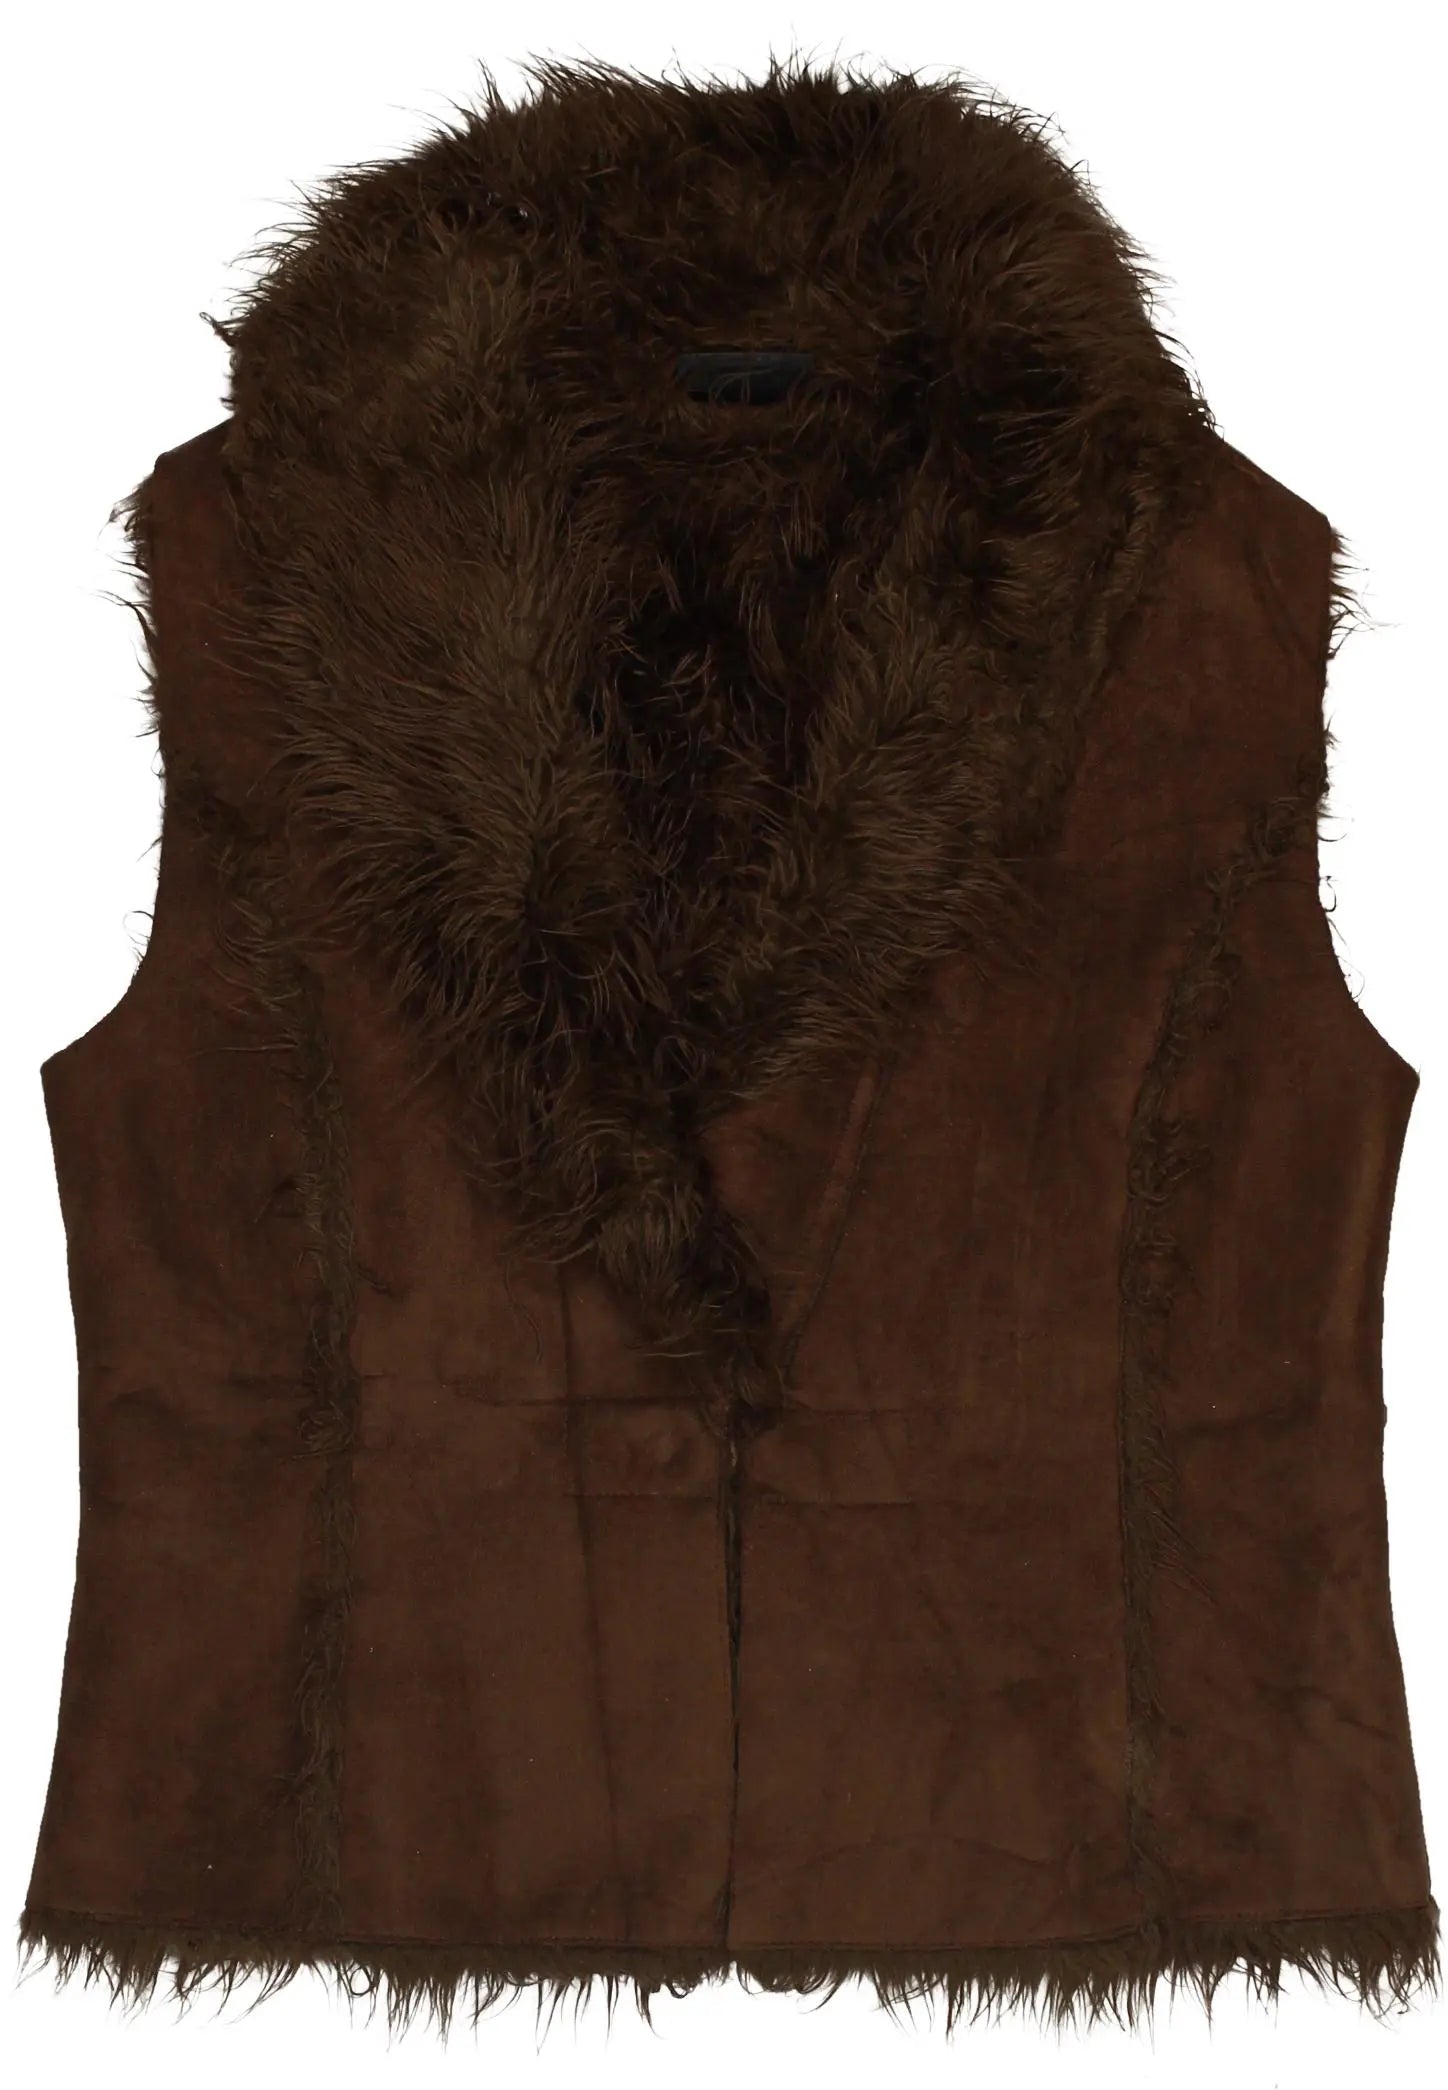 Promiss - Faux Fur vest- ThriftTale.com - Vintage and second handclothing